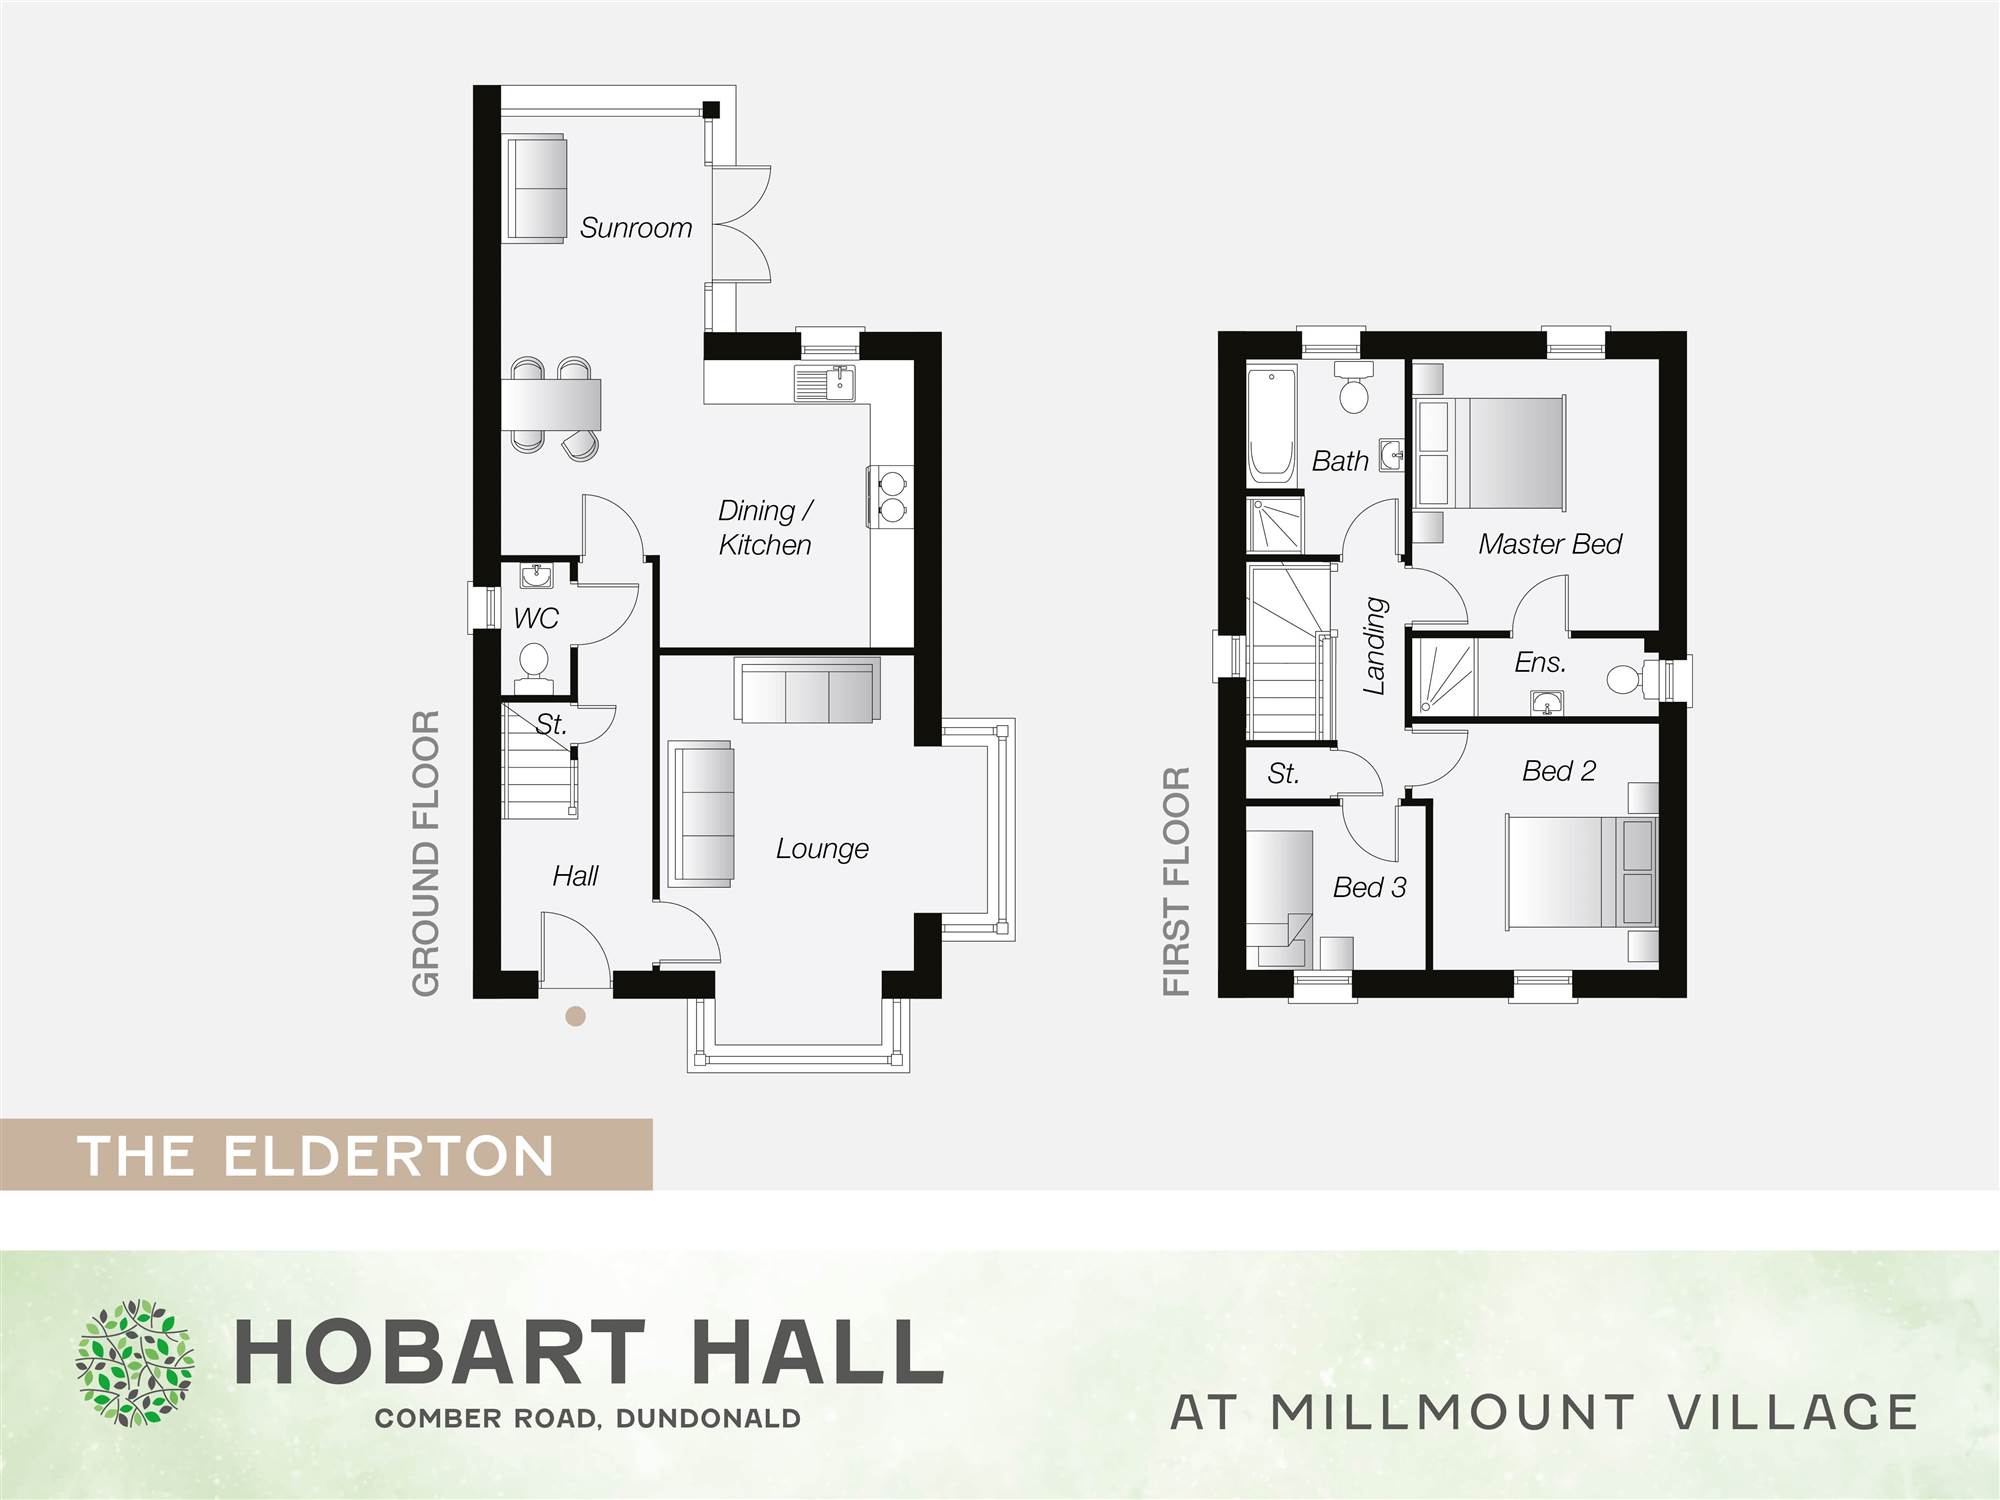 7 Hobart Hall at Millmount Village